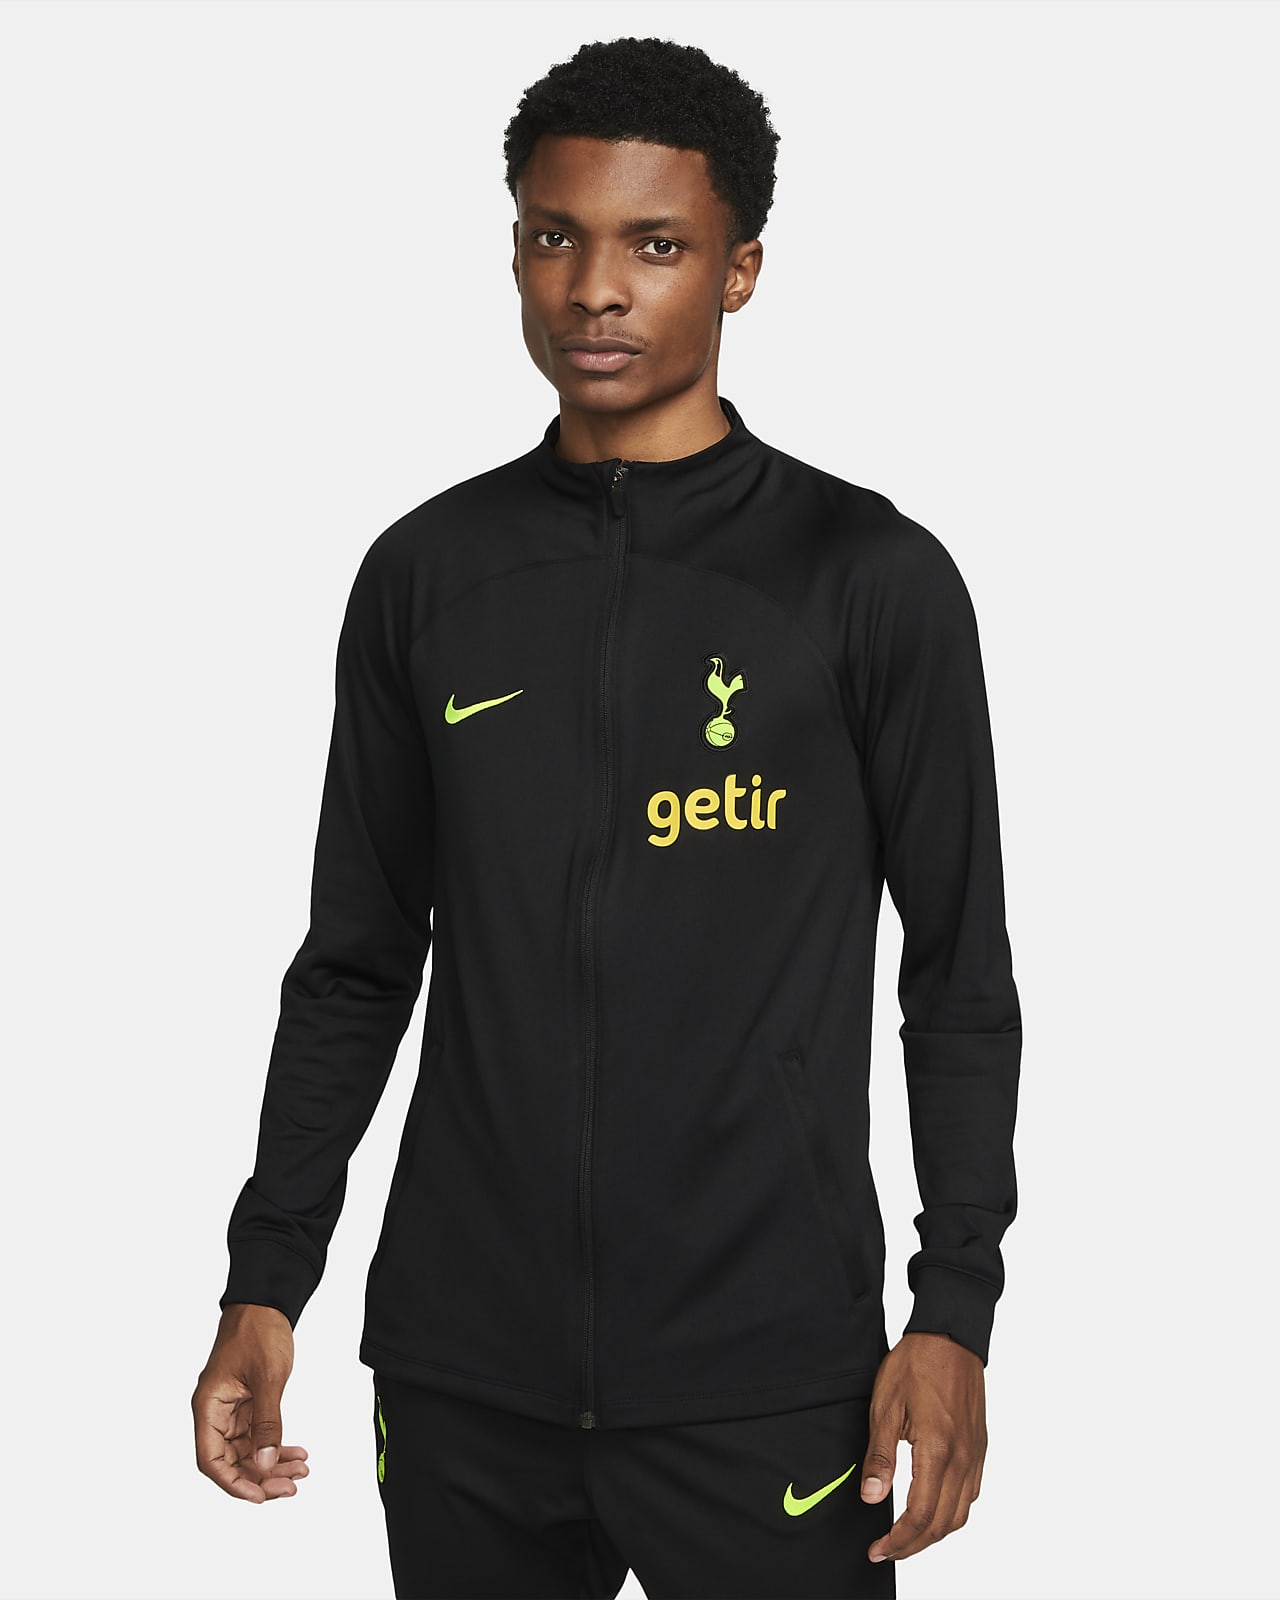 Tottenham Men's Dri-FIT Soccer Jacket. Nike.com